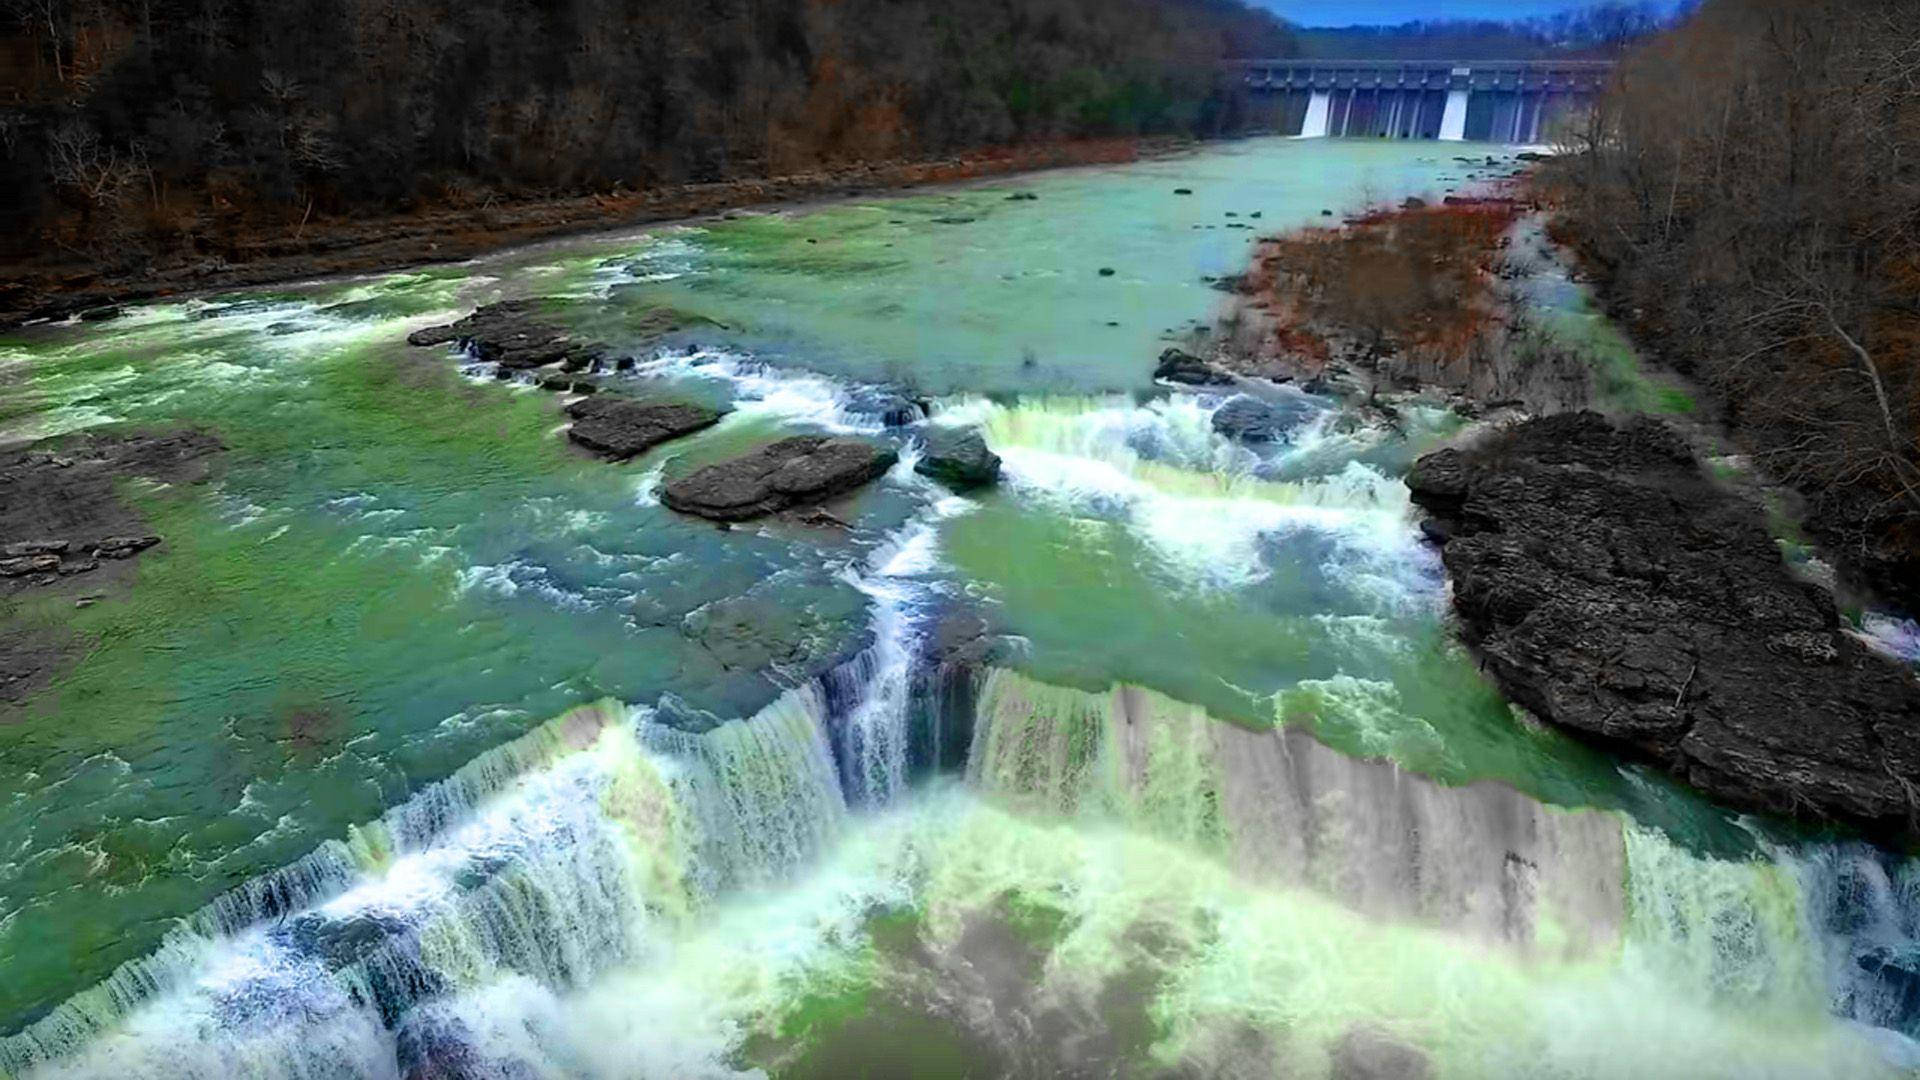 Tennesseerock Island River - Tennessee Rock Island River Wallpaper